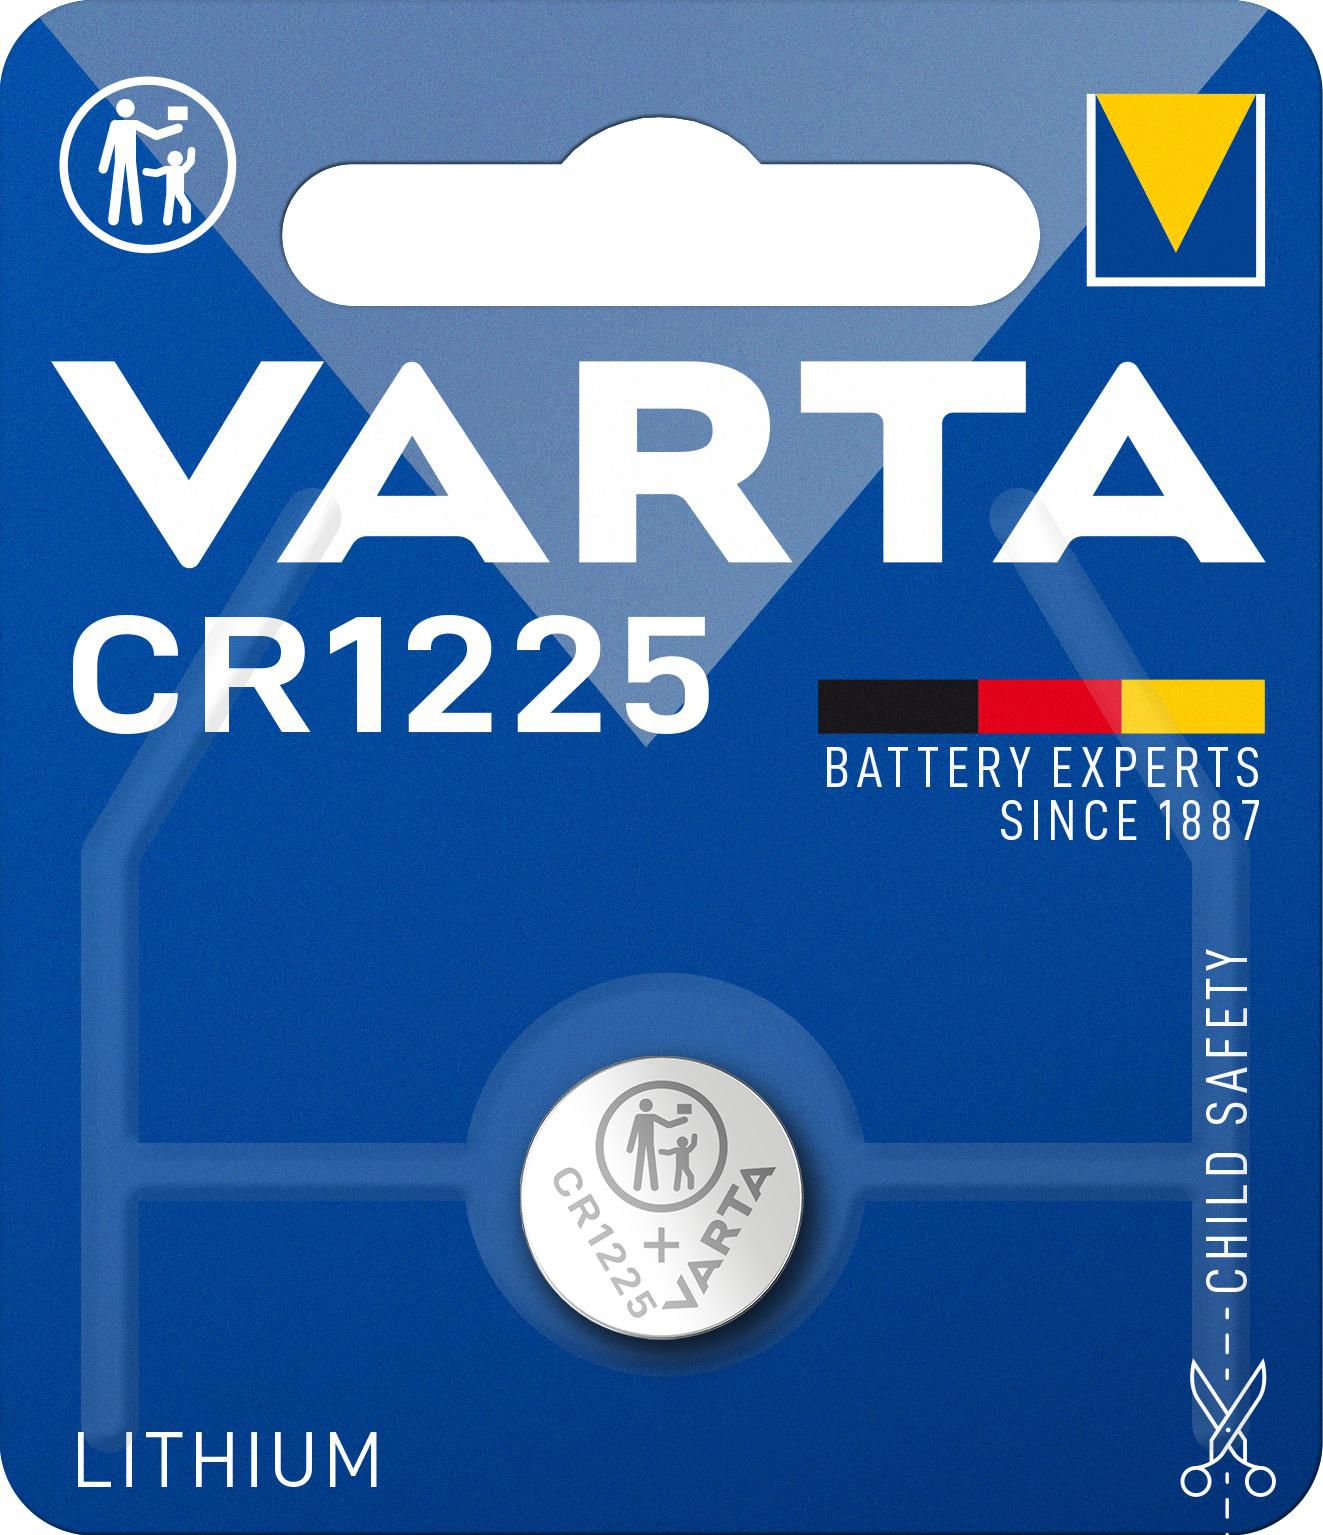 Varta 6225101401 electronic CR 1225 